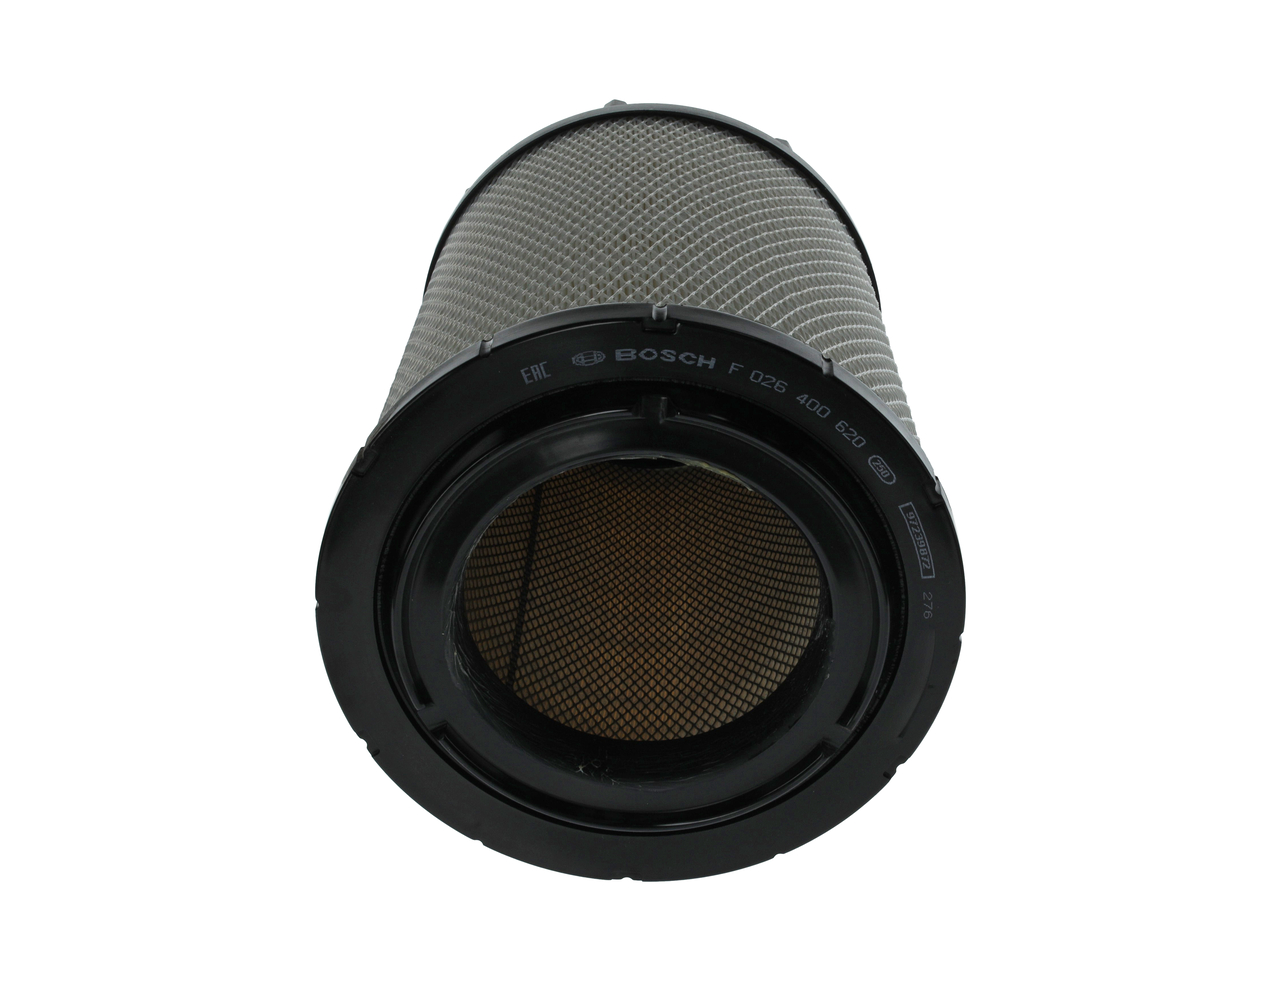 S 0620 BOSCH 435mm, 302mm, Filter Insert Height: 435mm Engine air filter F 026 400 620 buy